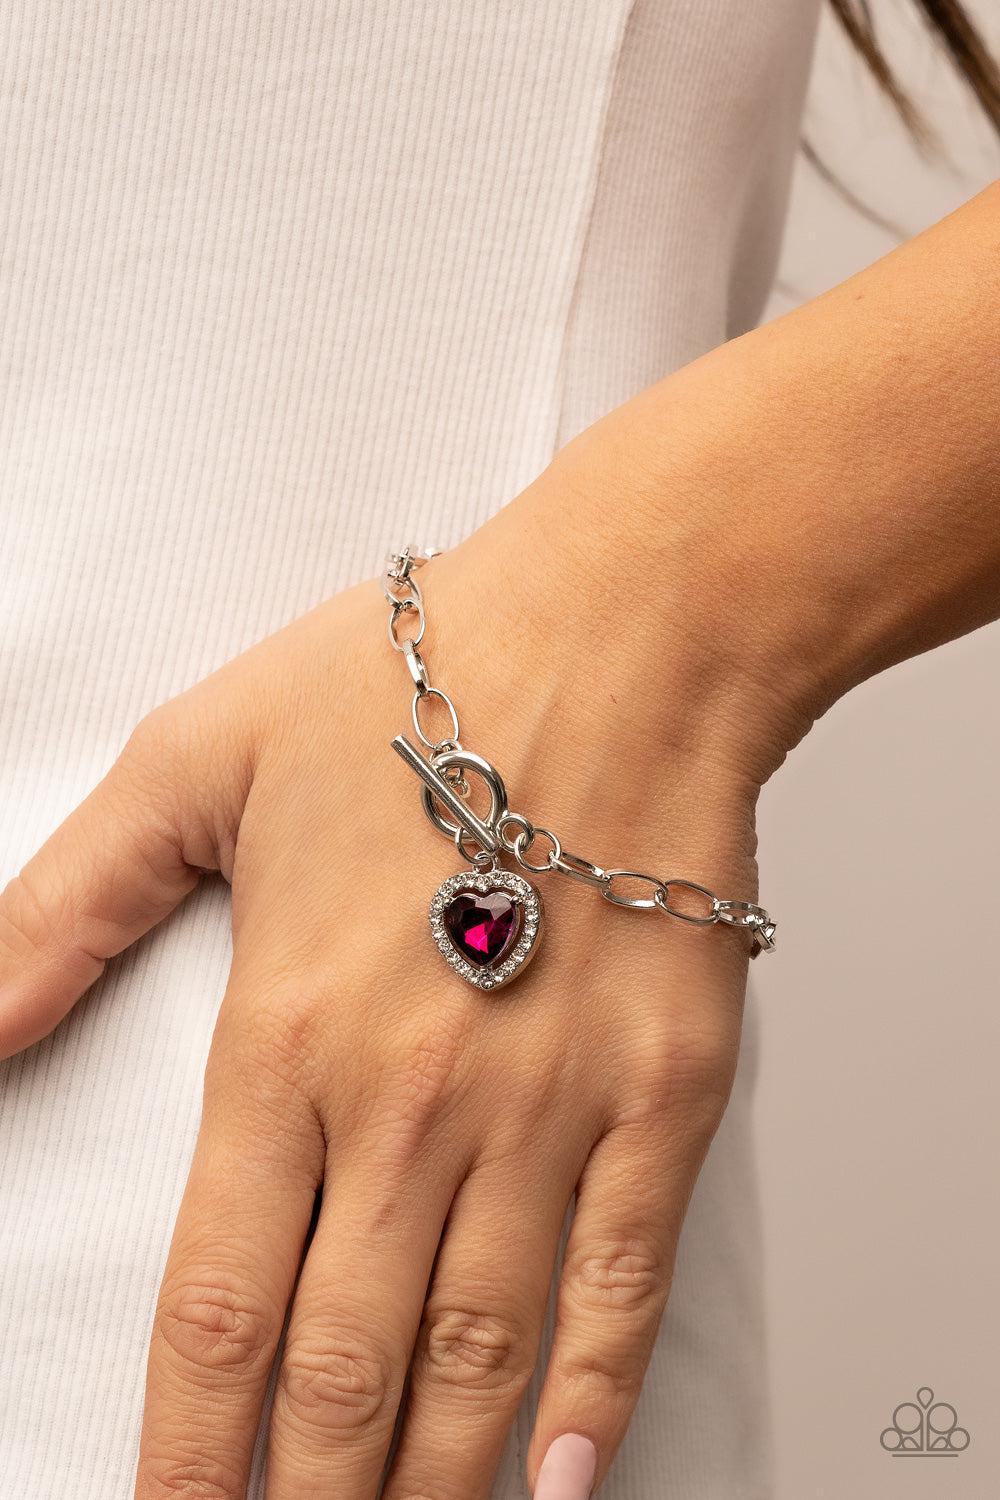 Till DAZZLE Do Us Part Pink Rhinestone Heart Bracelet - Paparazzi Accessories- on model - CarasShop.com - $5 Jewelry by Cara Jewels